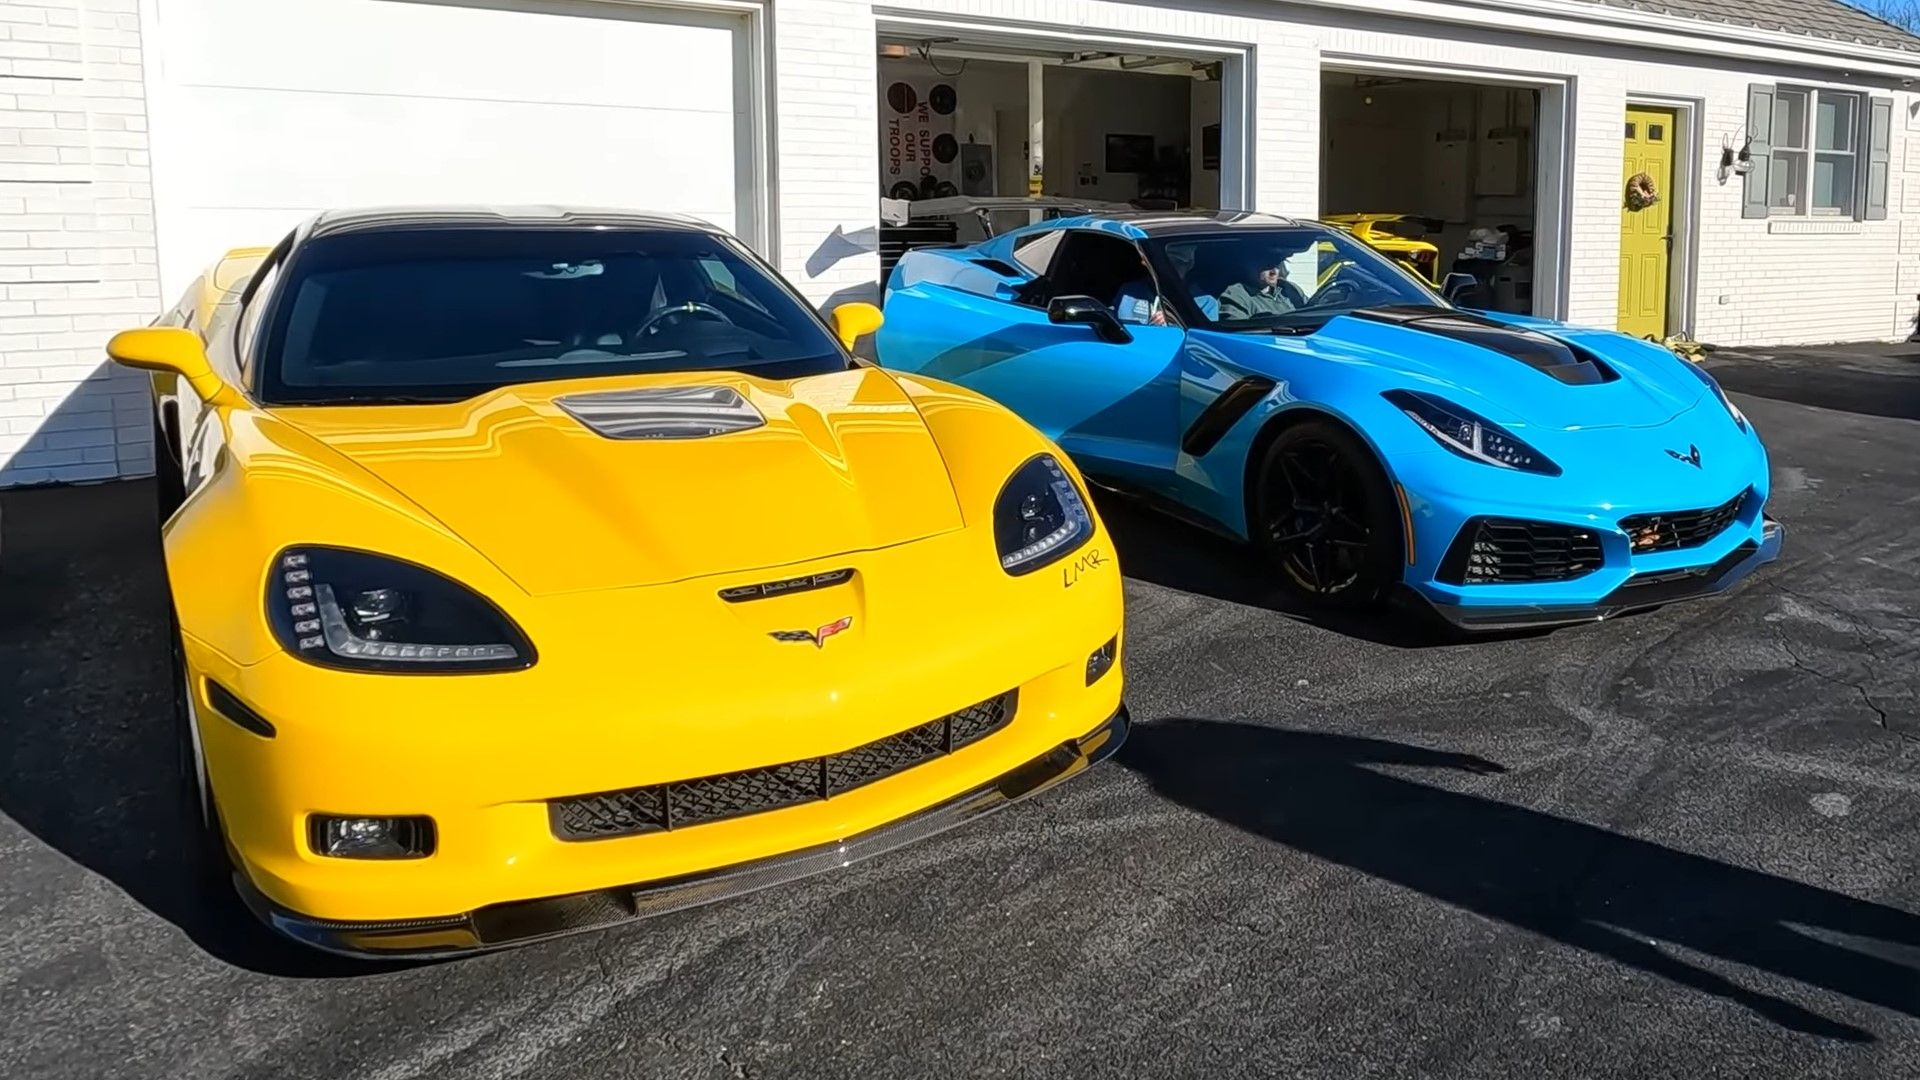 A yellow 2013 Chevrolet Corvette C6 ZR1 and a blue 2019 Chevrolet Corvette C7 ZR1 